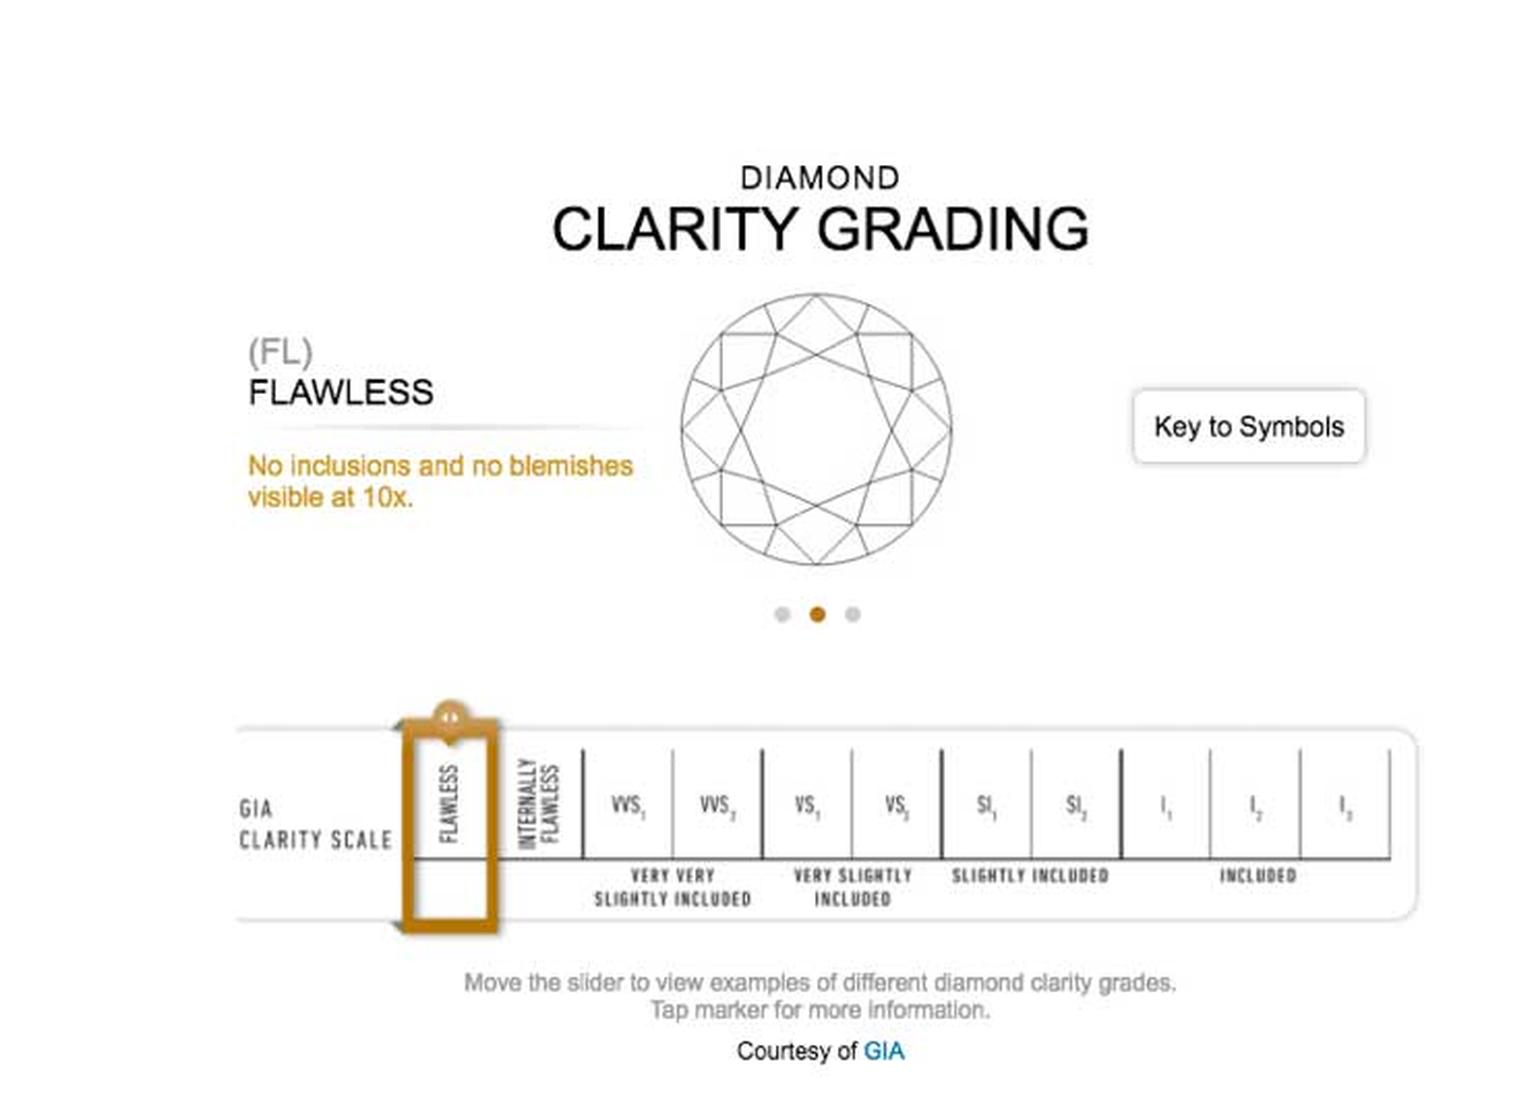 GIA Clarity grading chart